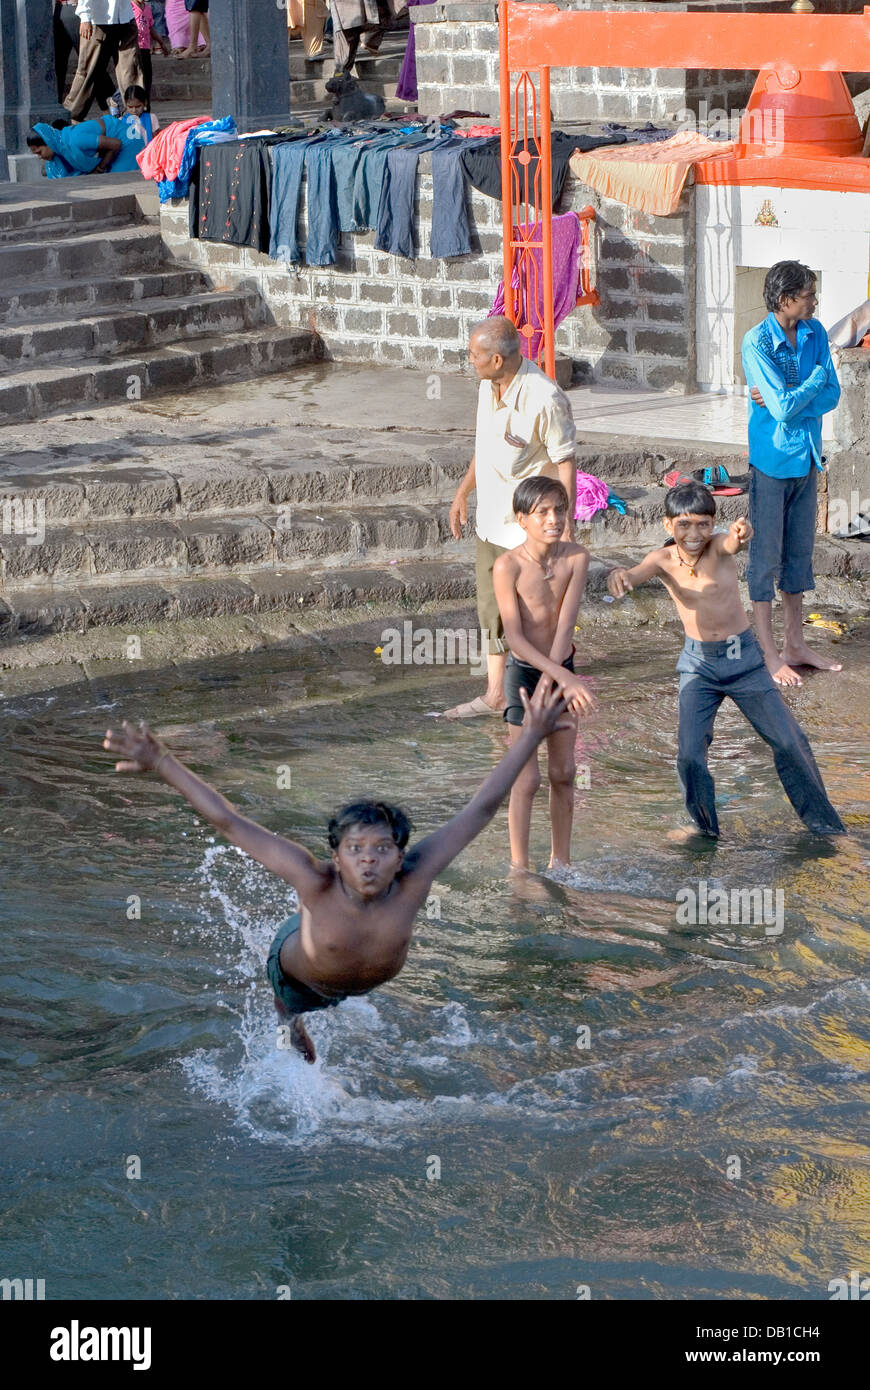 Nashik, Maharashtra, India. 15th May 2008. Young Indian boys swim in the River Godavari in Nashik, Maharashtra. Stock Photo